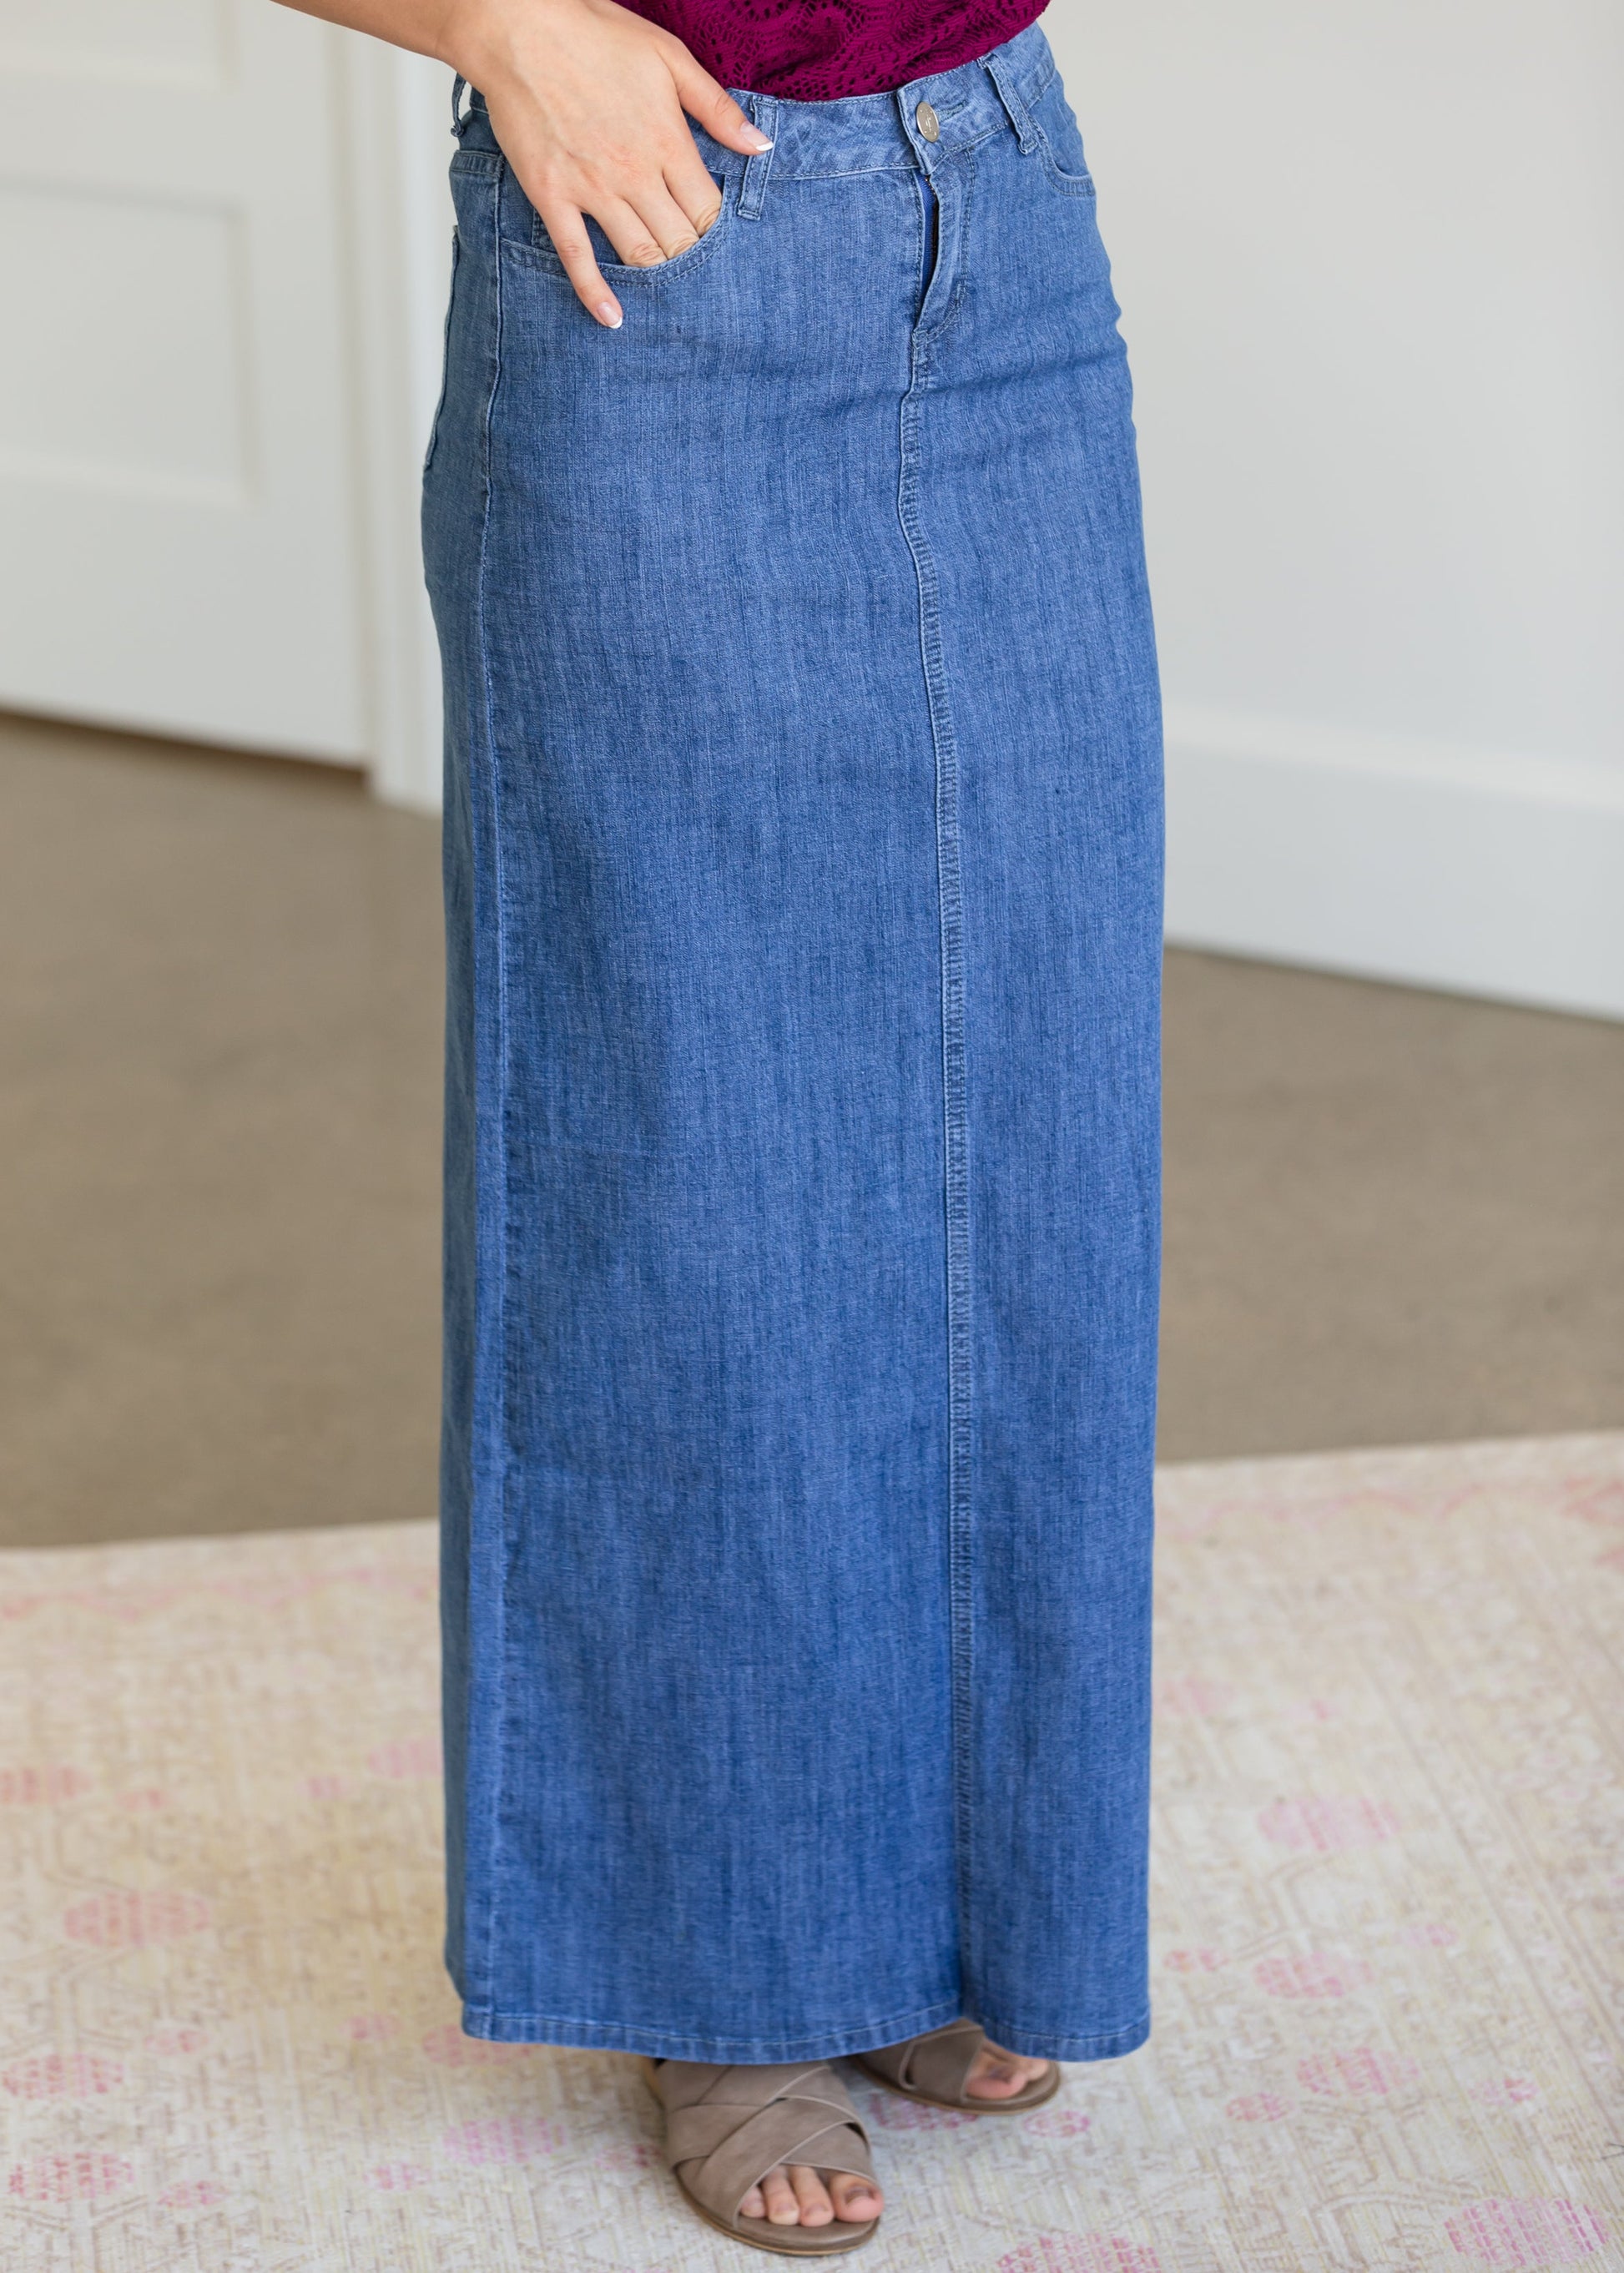 Ellie Long Denim Skirt - FINAL SALE Skirts Light Wash / 6